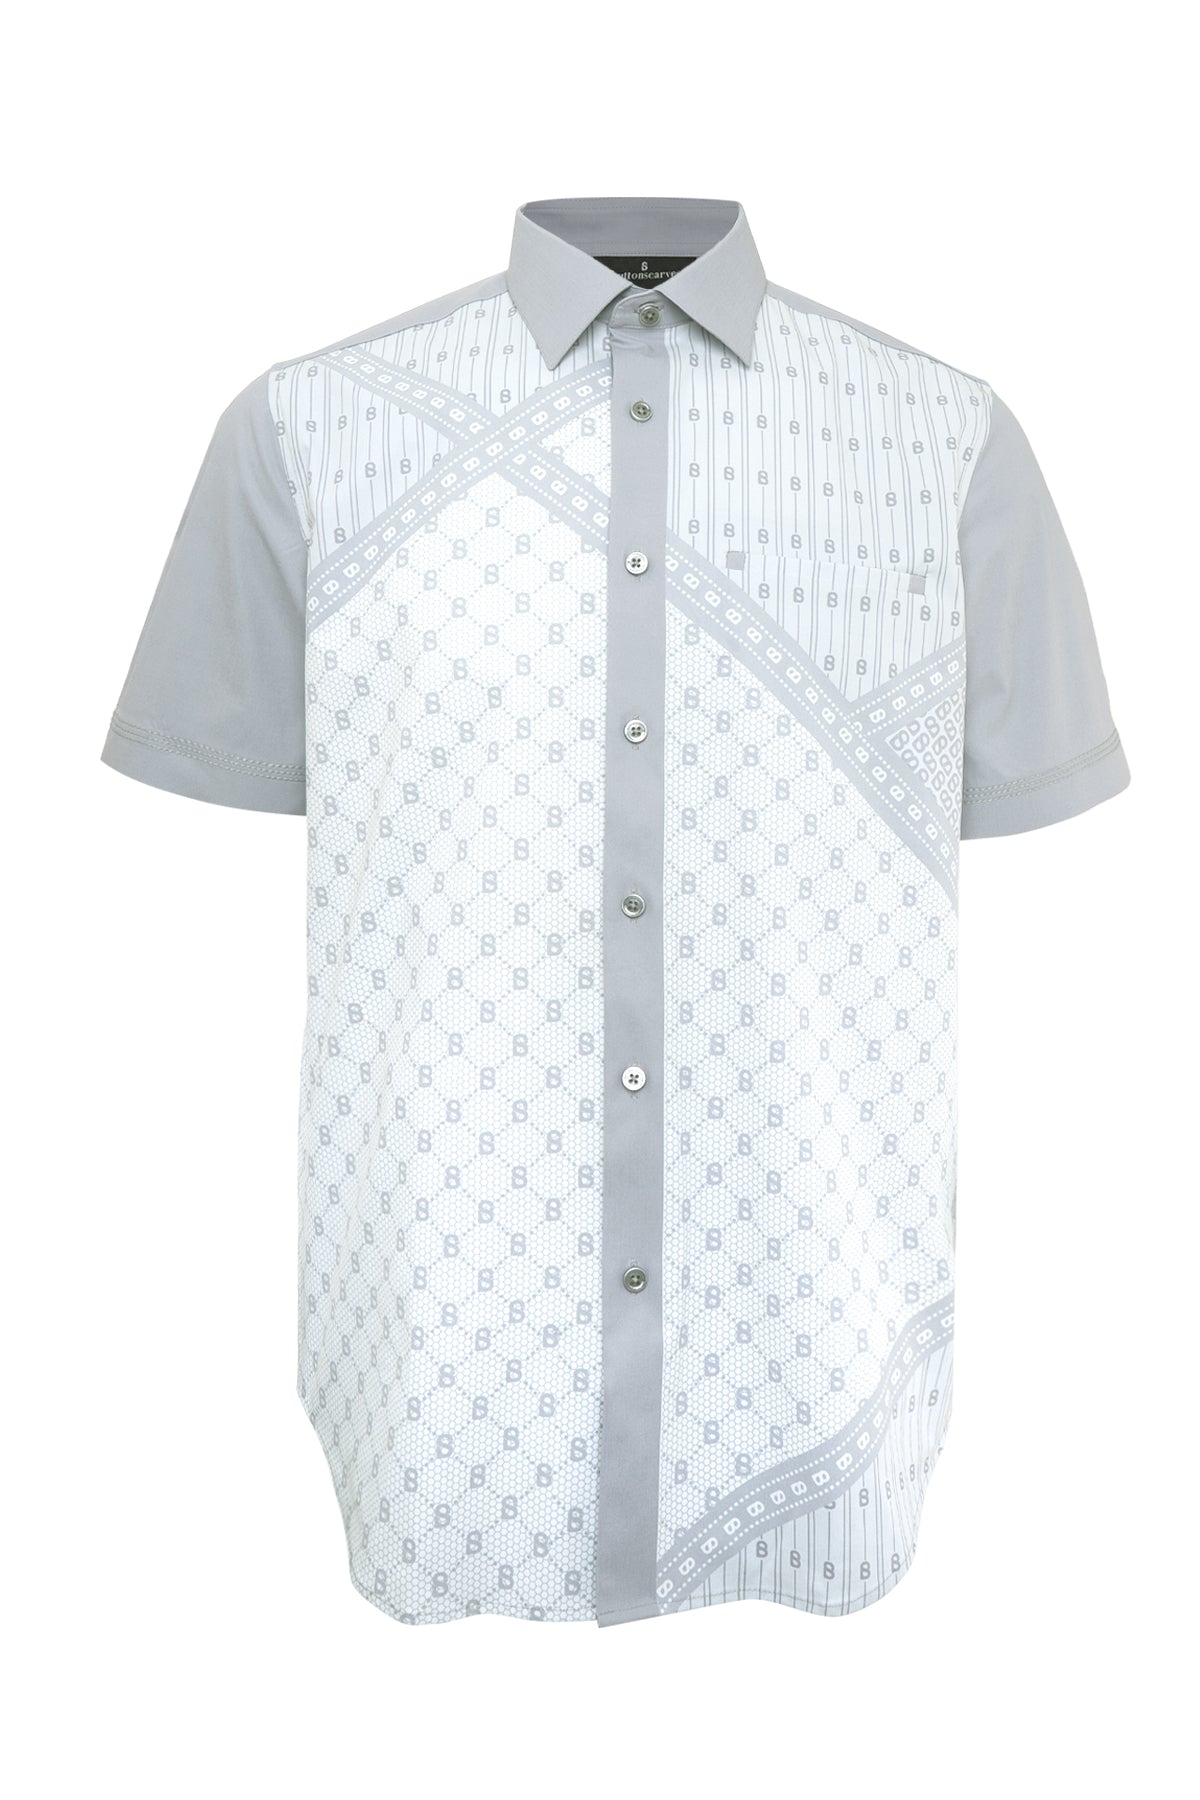 ZYSWP Men's Short Sleeve Shirts Summer Monochrome Cotton Half Sleeve  Clothes Men's Shirts (Color : Gray, Size : XL Code) : : Home